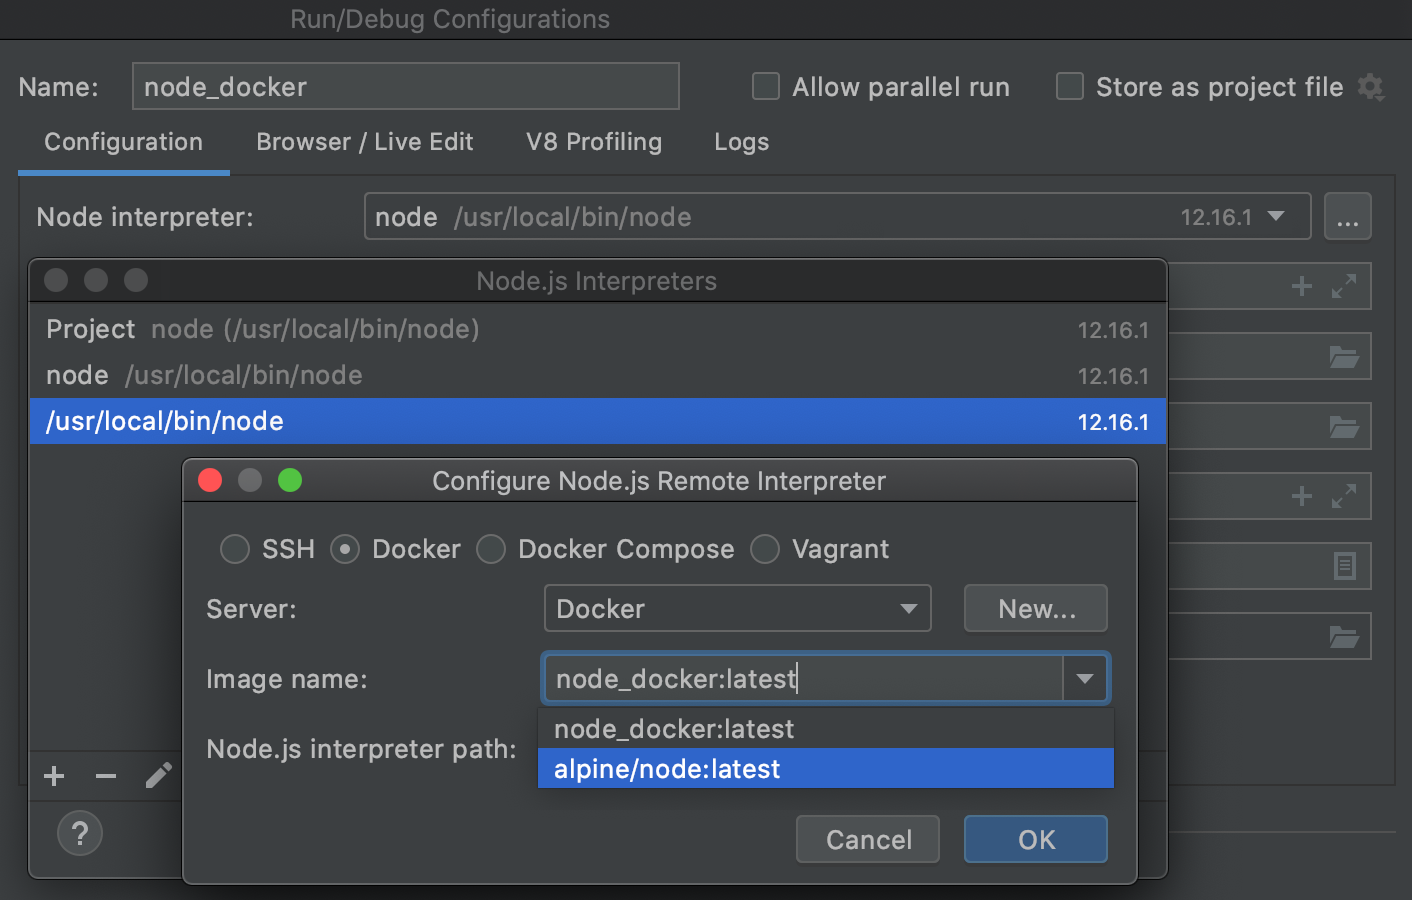 Configuring a remote Node.js interpreter on Docker